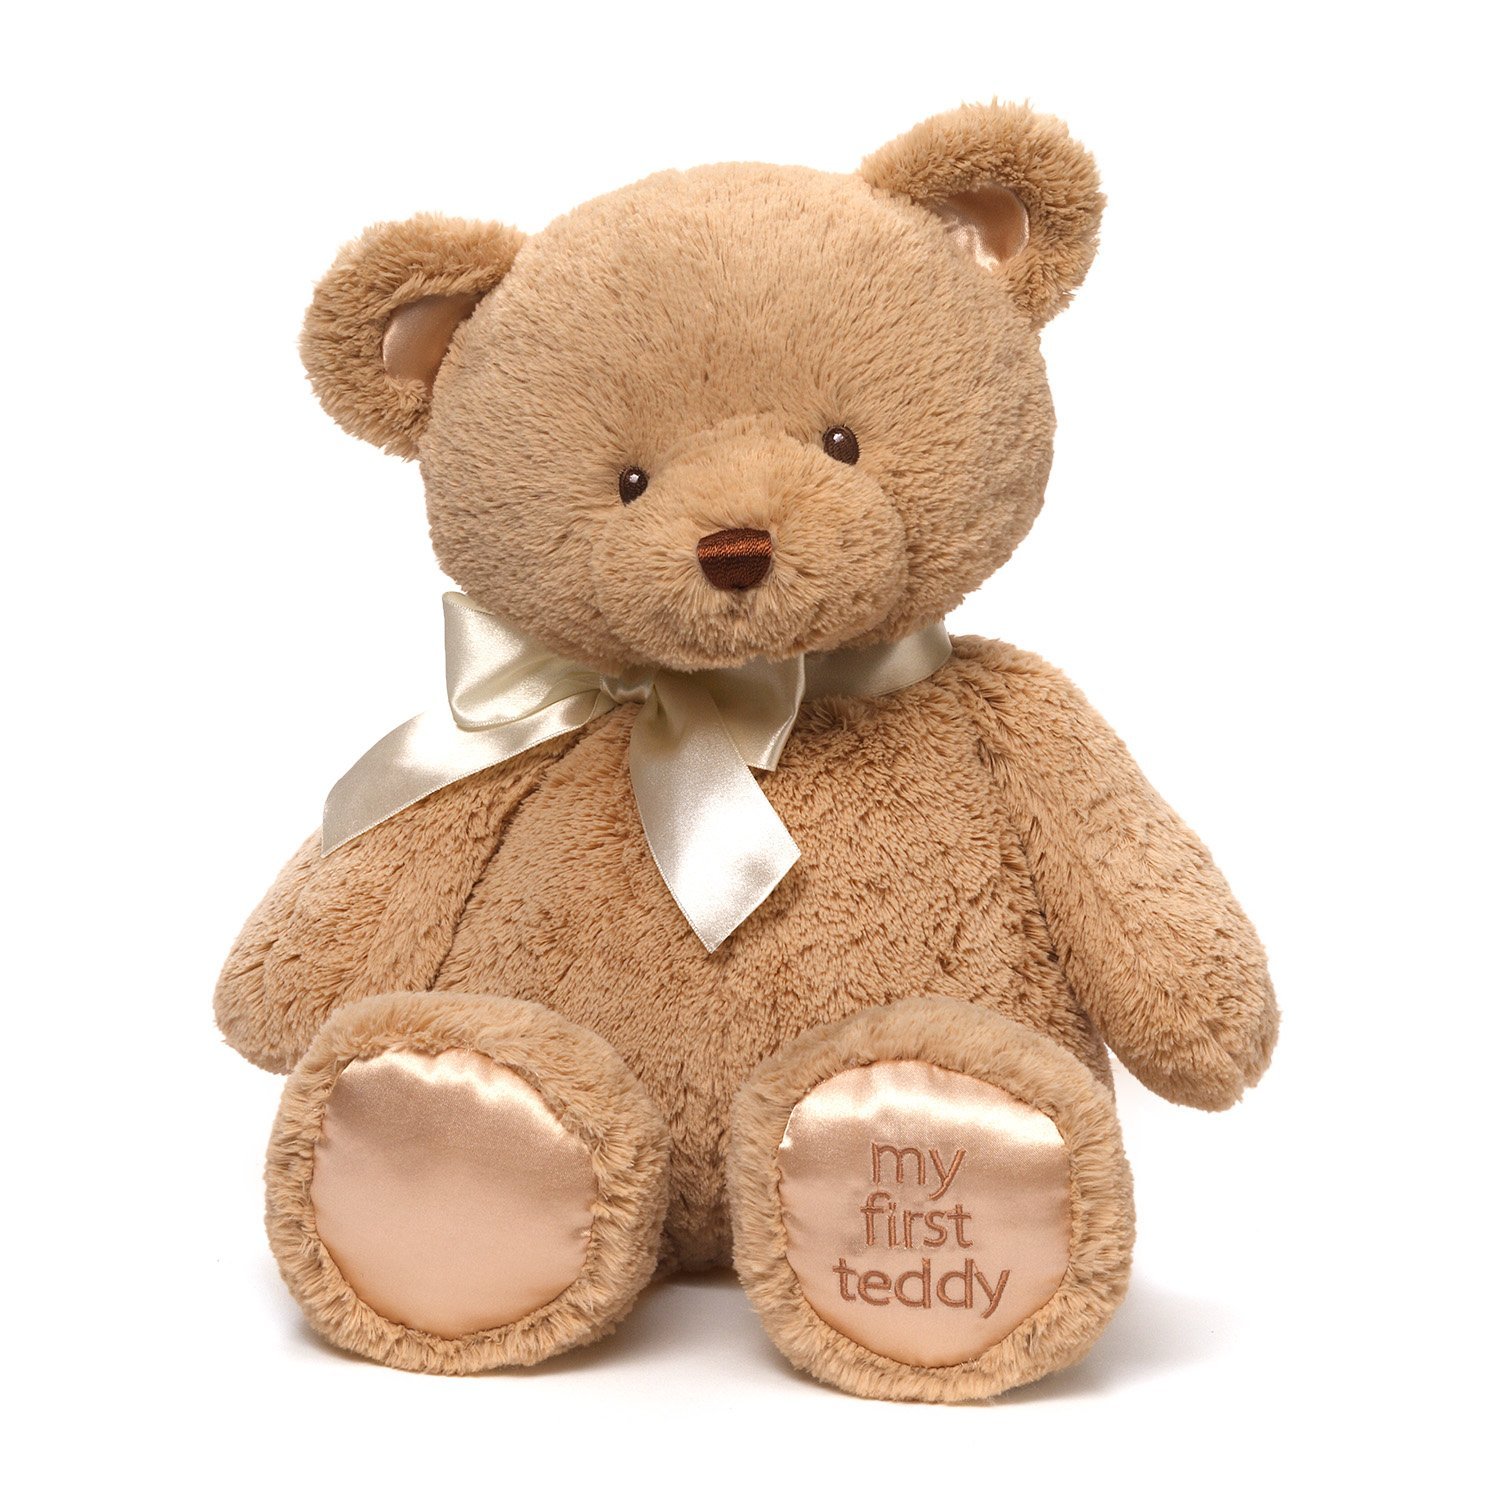 Amazon.com : Baby GUND My First Teddy Bear Stuffed Animal Plush, Tan ...